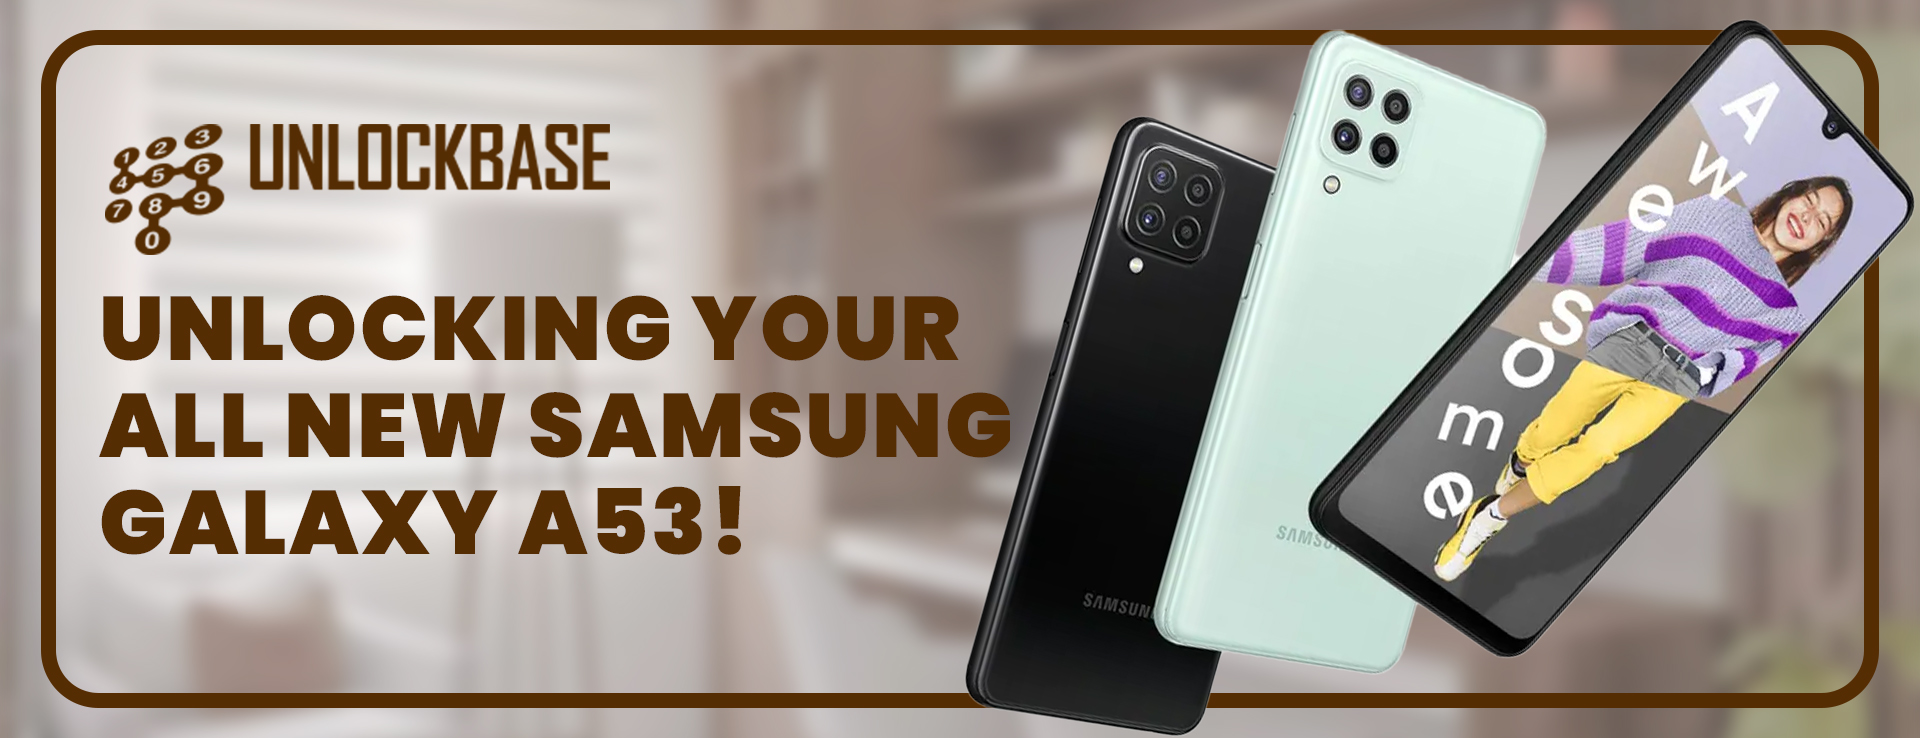 Samsung A53 Unlocked: Ways to Unlock your Phone!